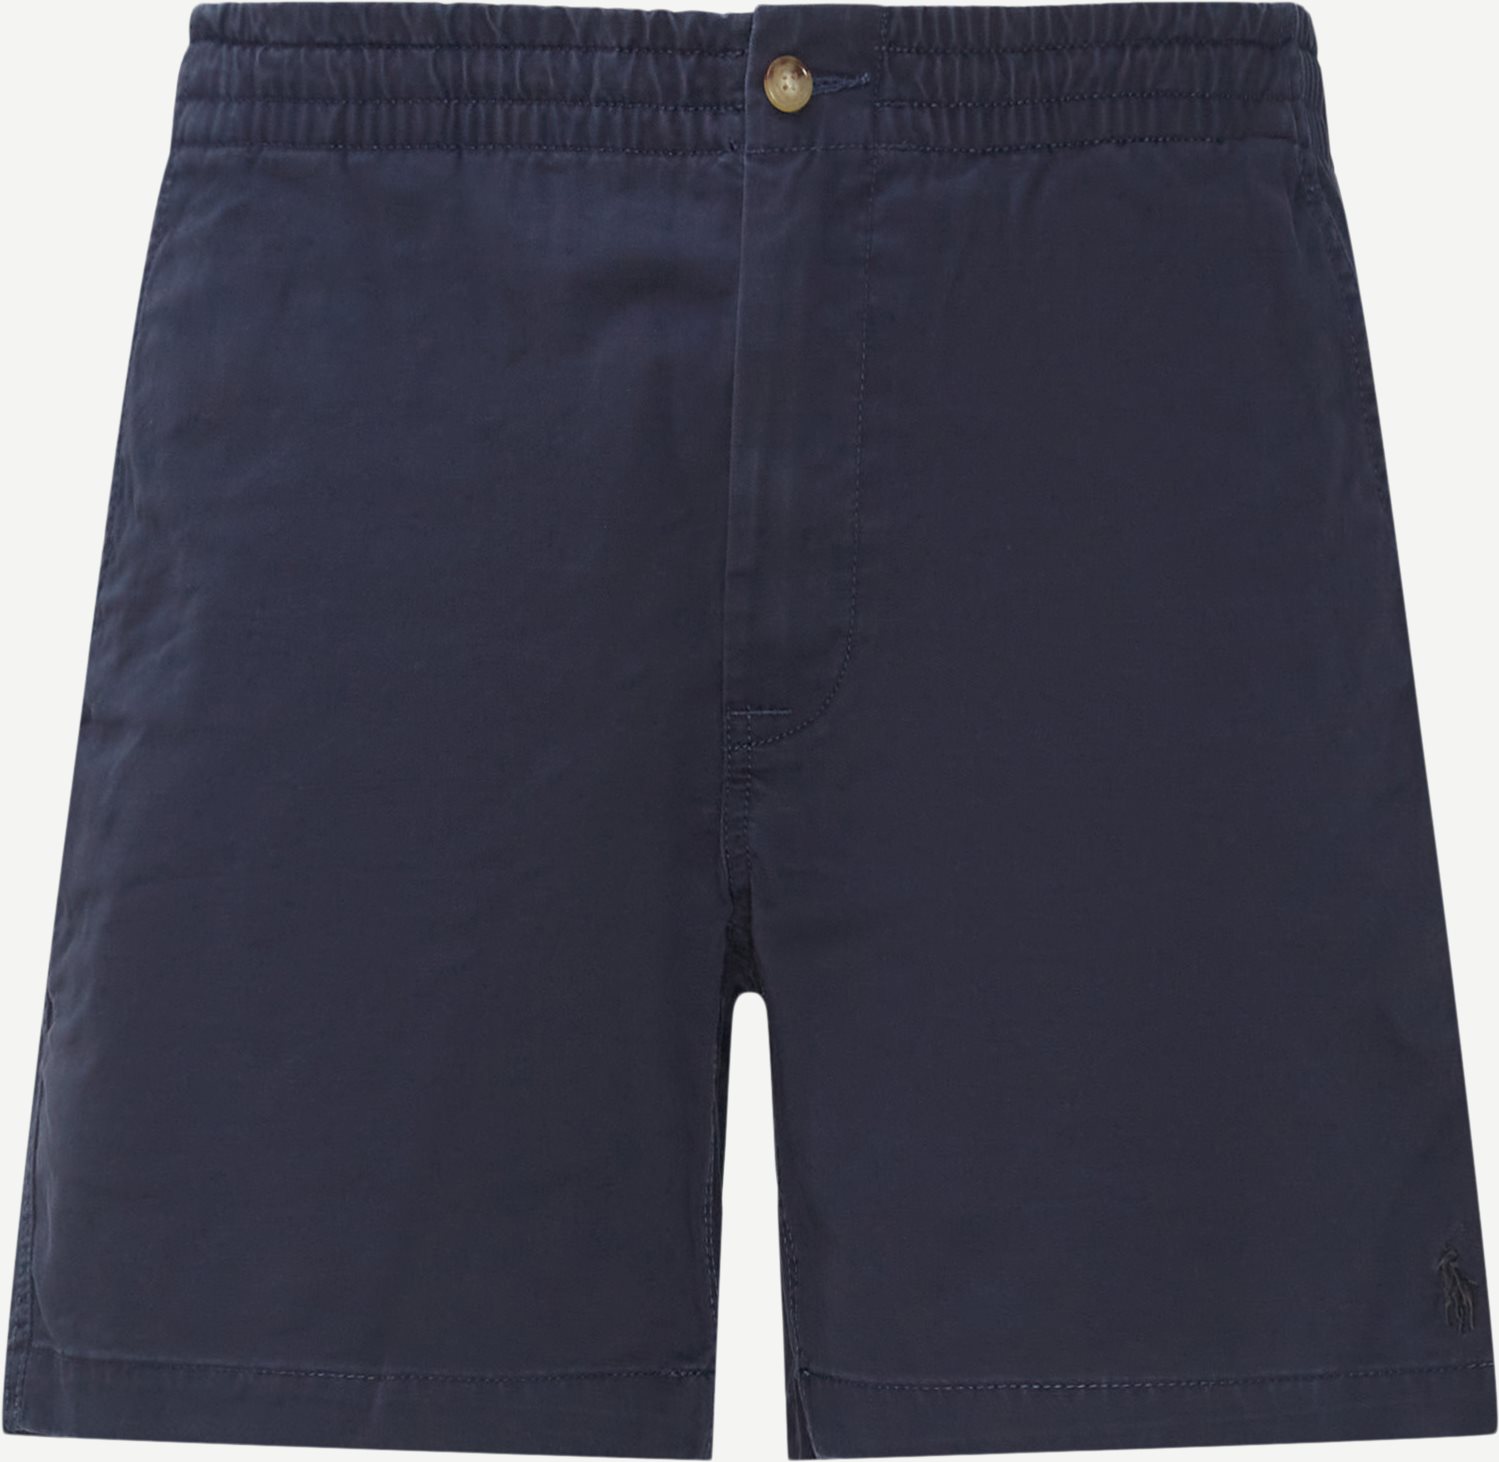 Shorts - Classic fit - Blå